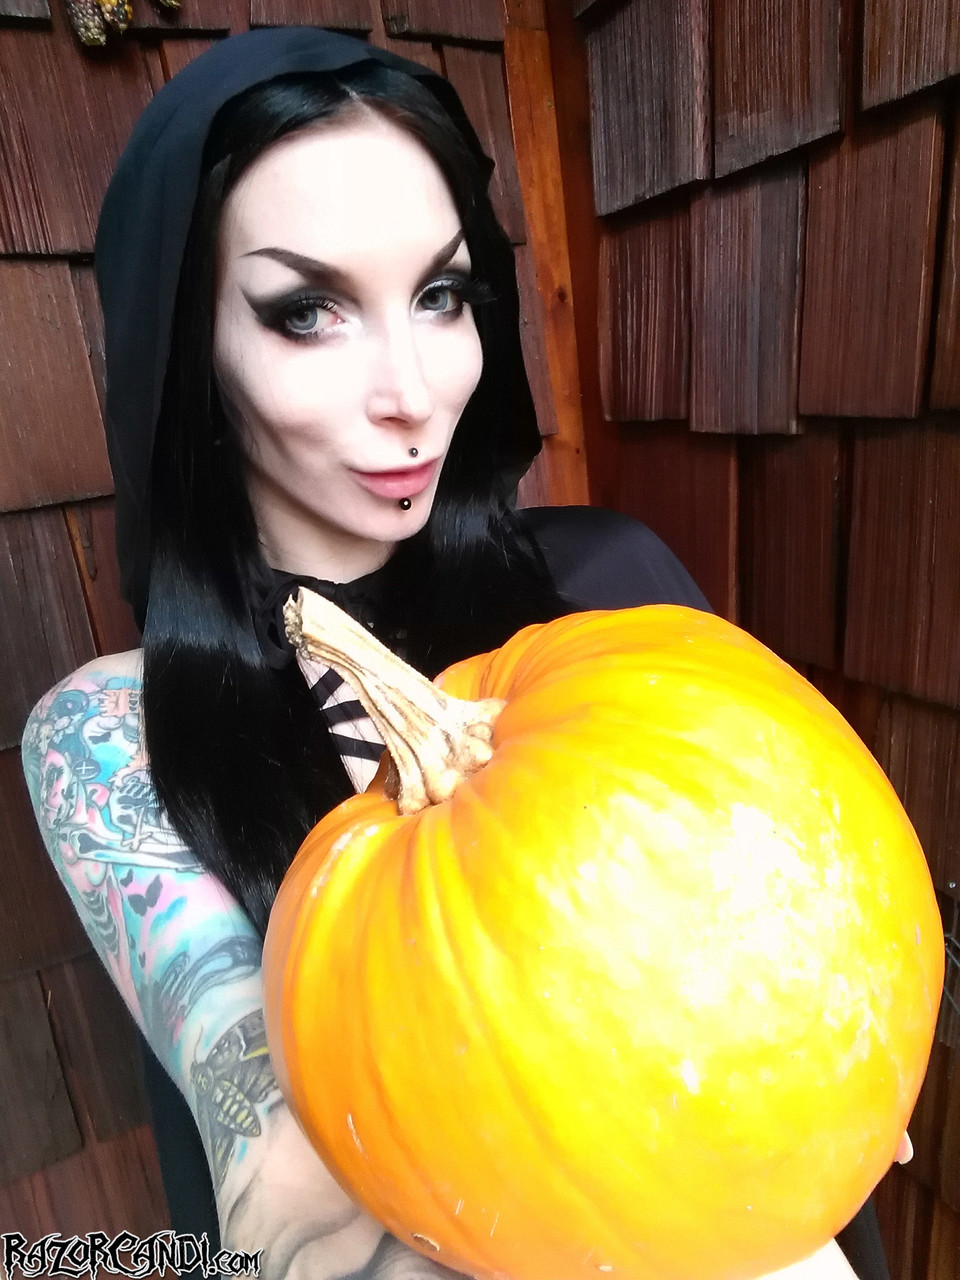 Goth girl Razor Candi flaunts her big ass over a pumpkin in Halloween attire 포르노 사진 #427655340 | Razor Candi Pics, Razor Candi, MILF, 모바일 포르노